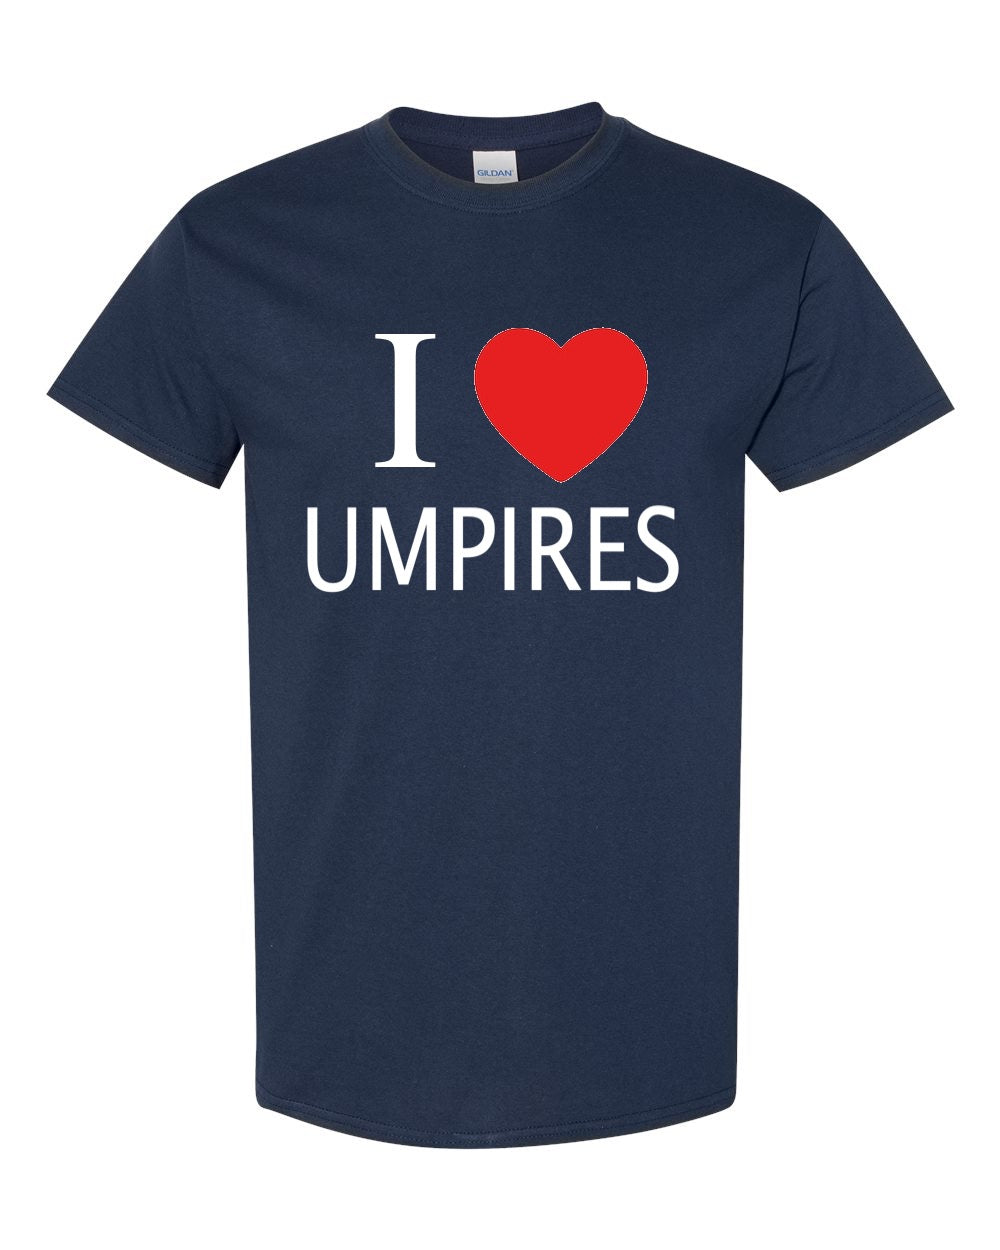 I Heart Umpires Shirt